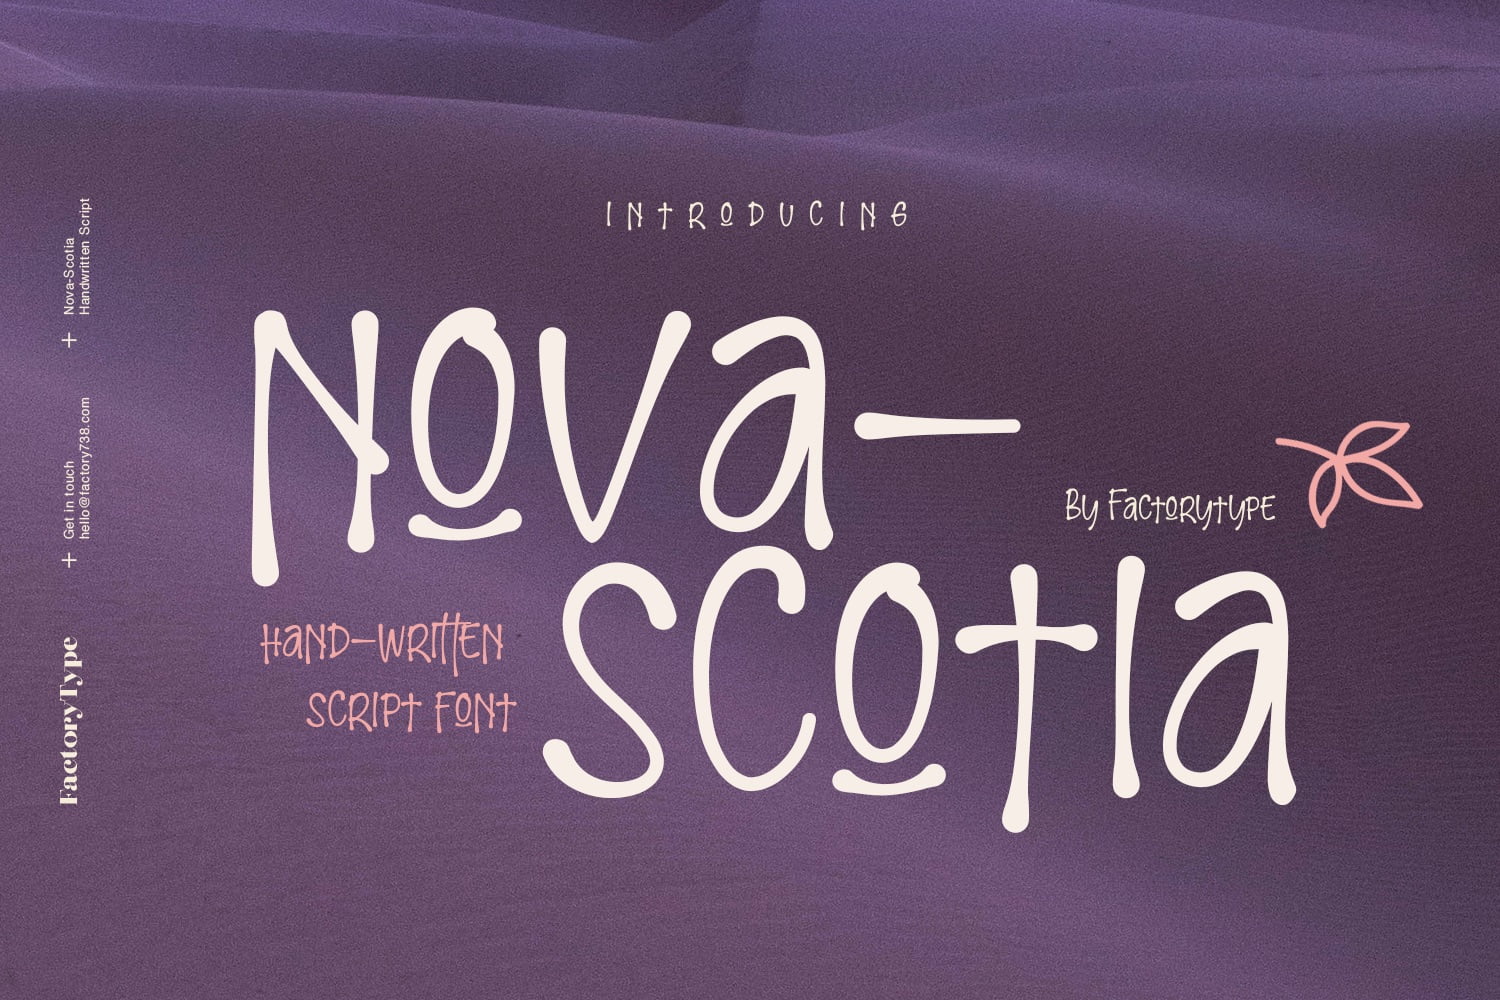 Nova-Scotia Handwriting